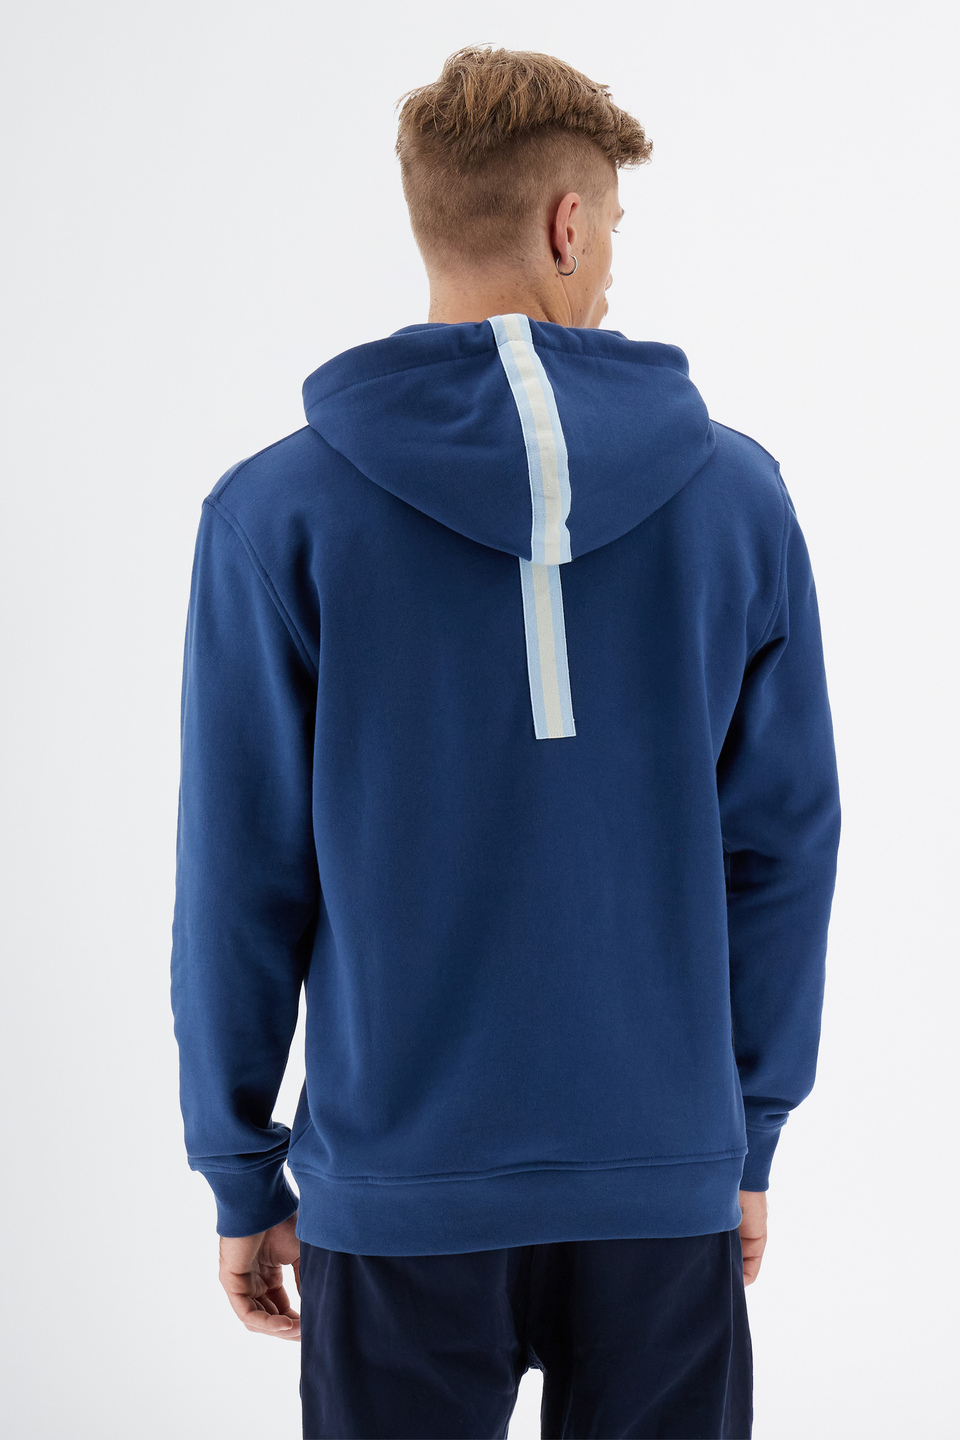 Men’s 100% comfort fit cotton long sleeve sweatshirt | La Martina - Official Online Shop